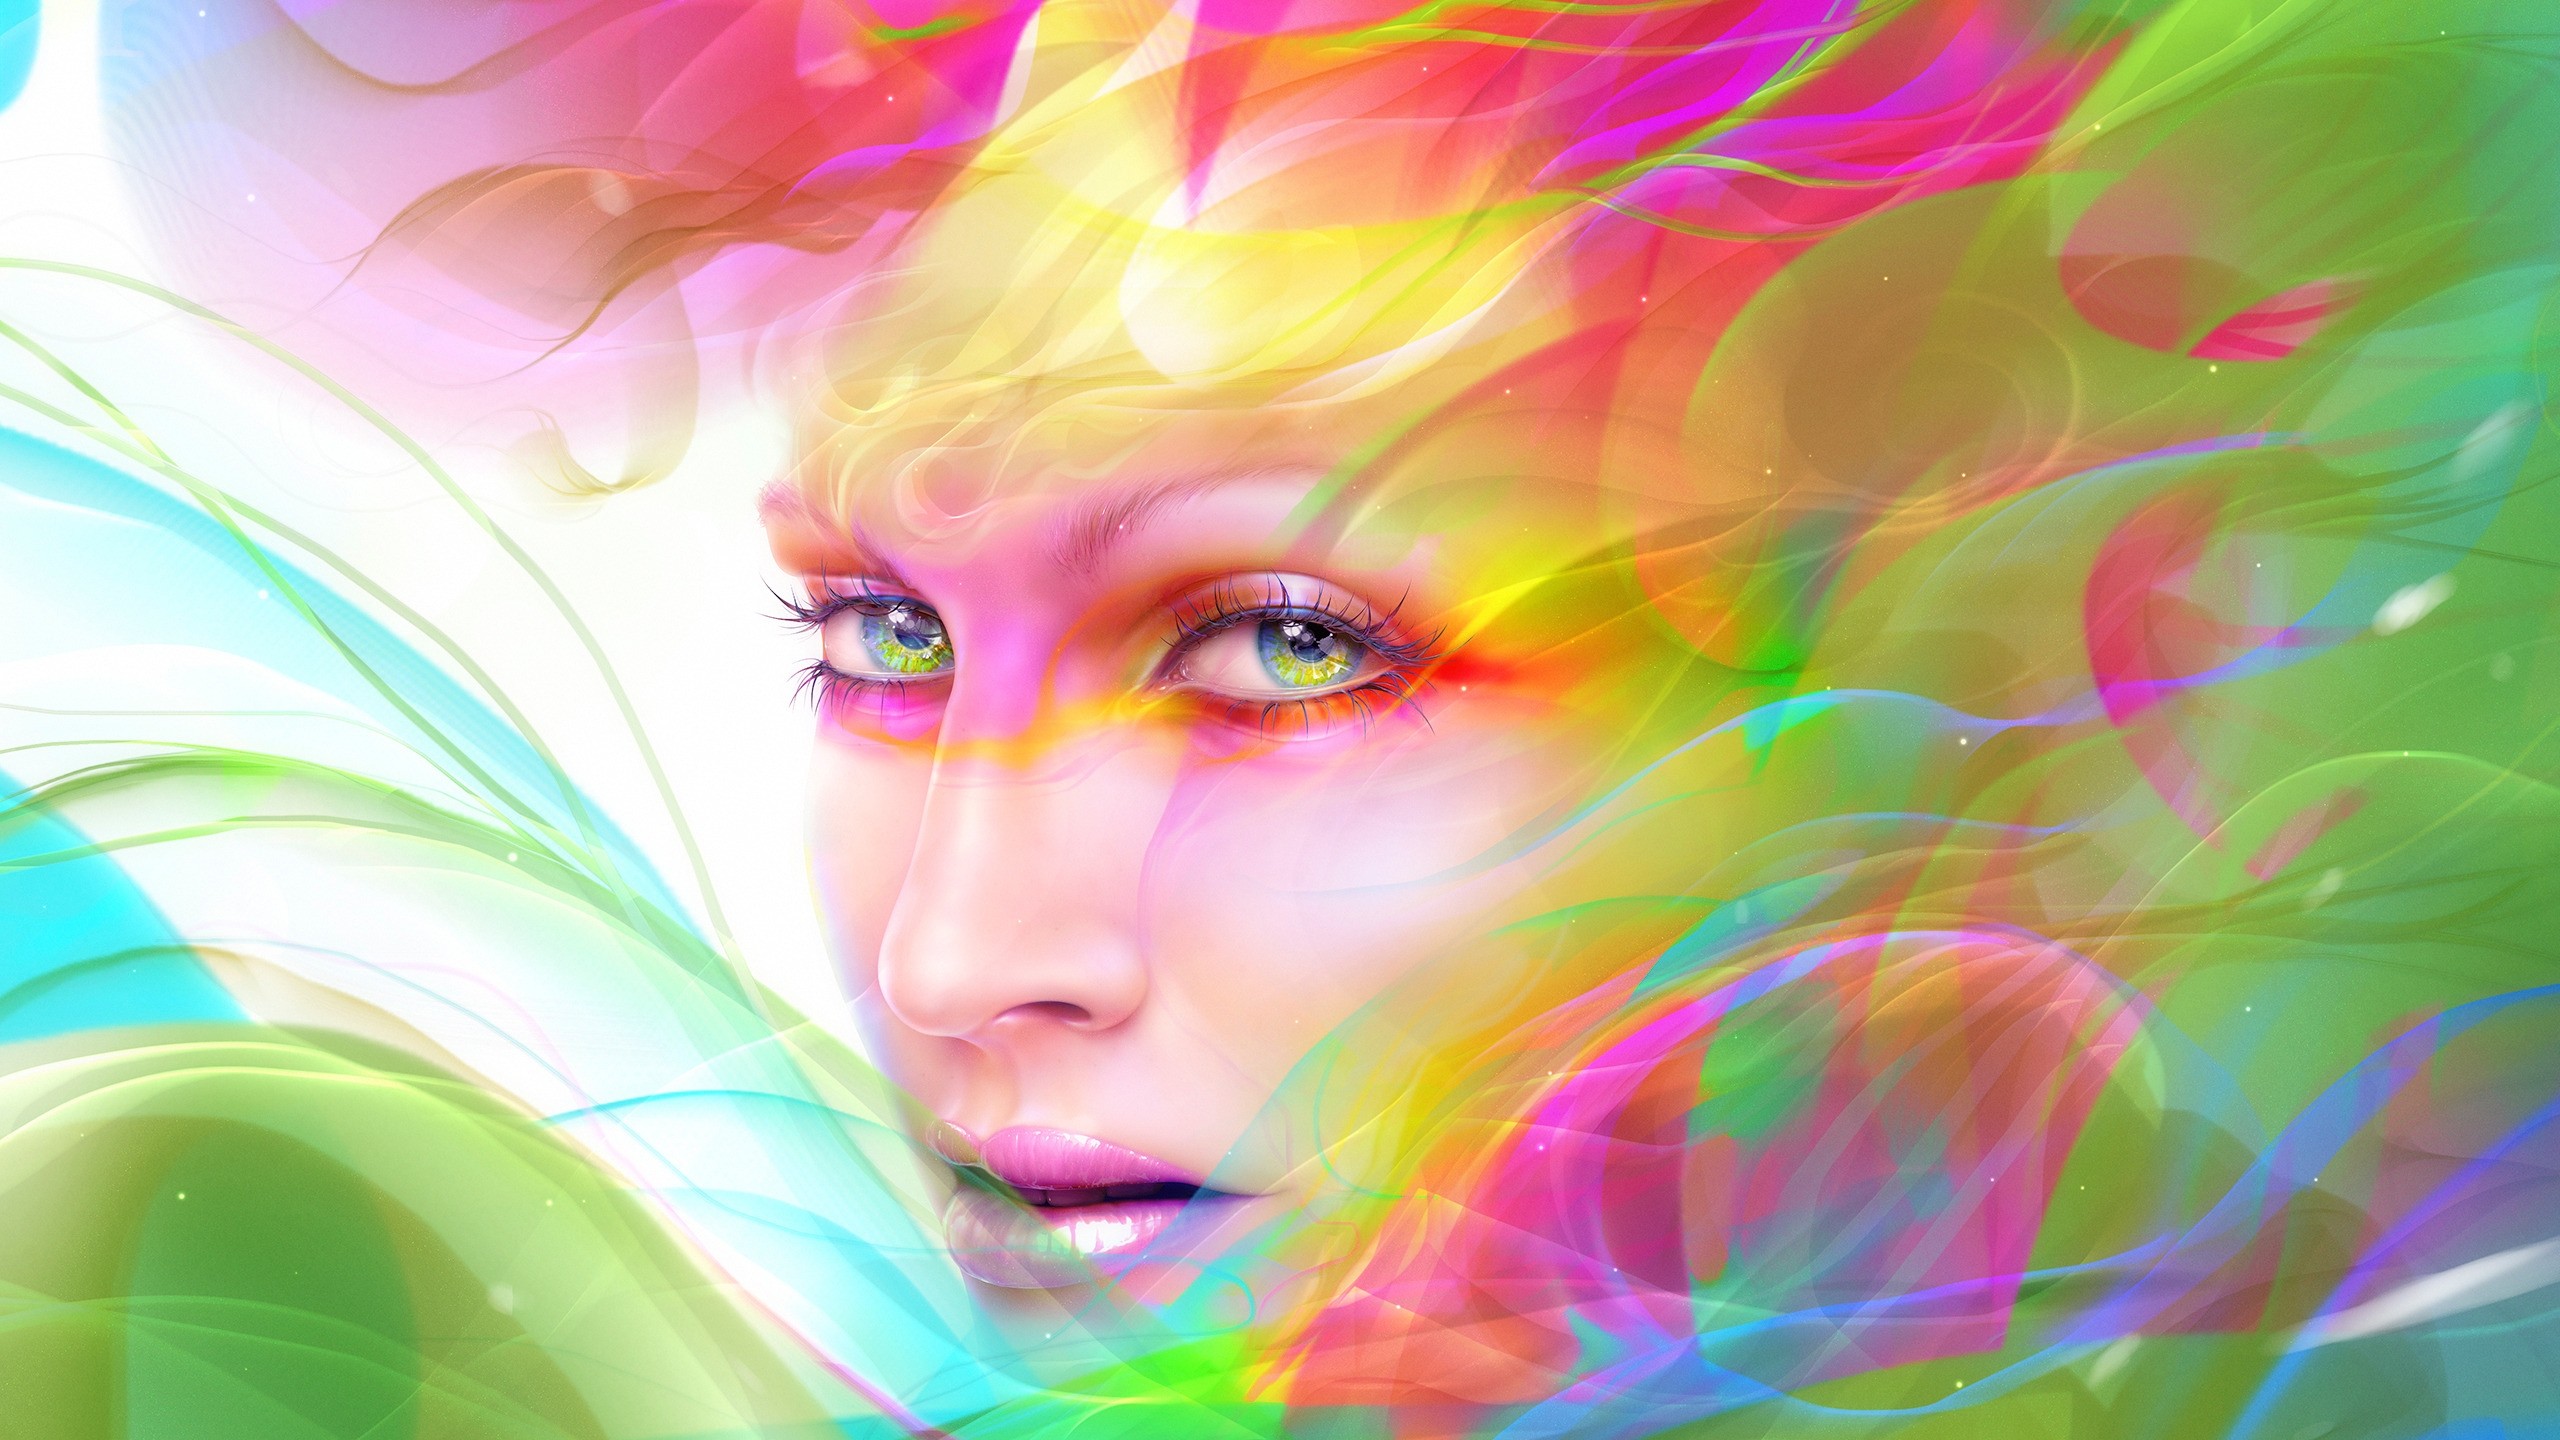 General 2560x1440 face women digital art colorful looking at viewer eyes lipstick artwork portrait closeup